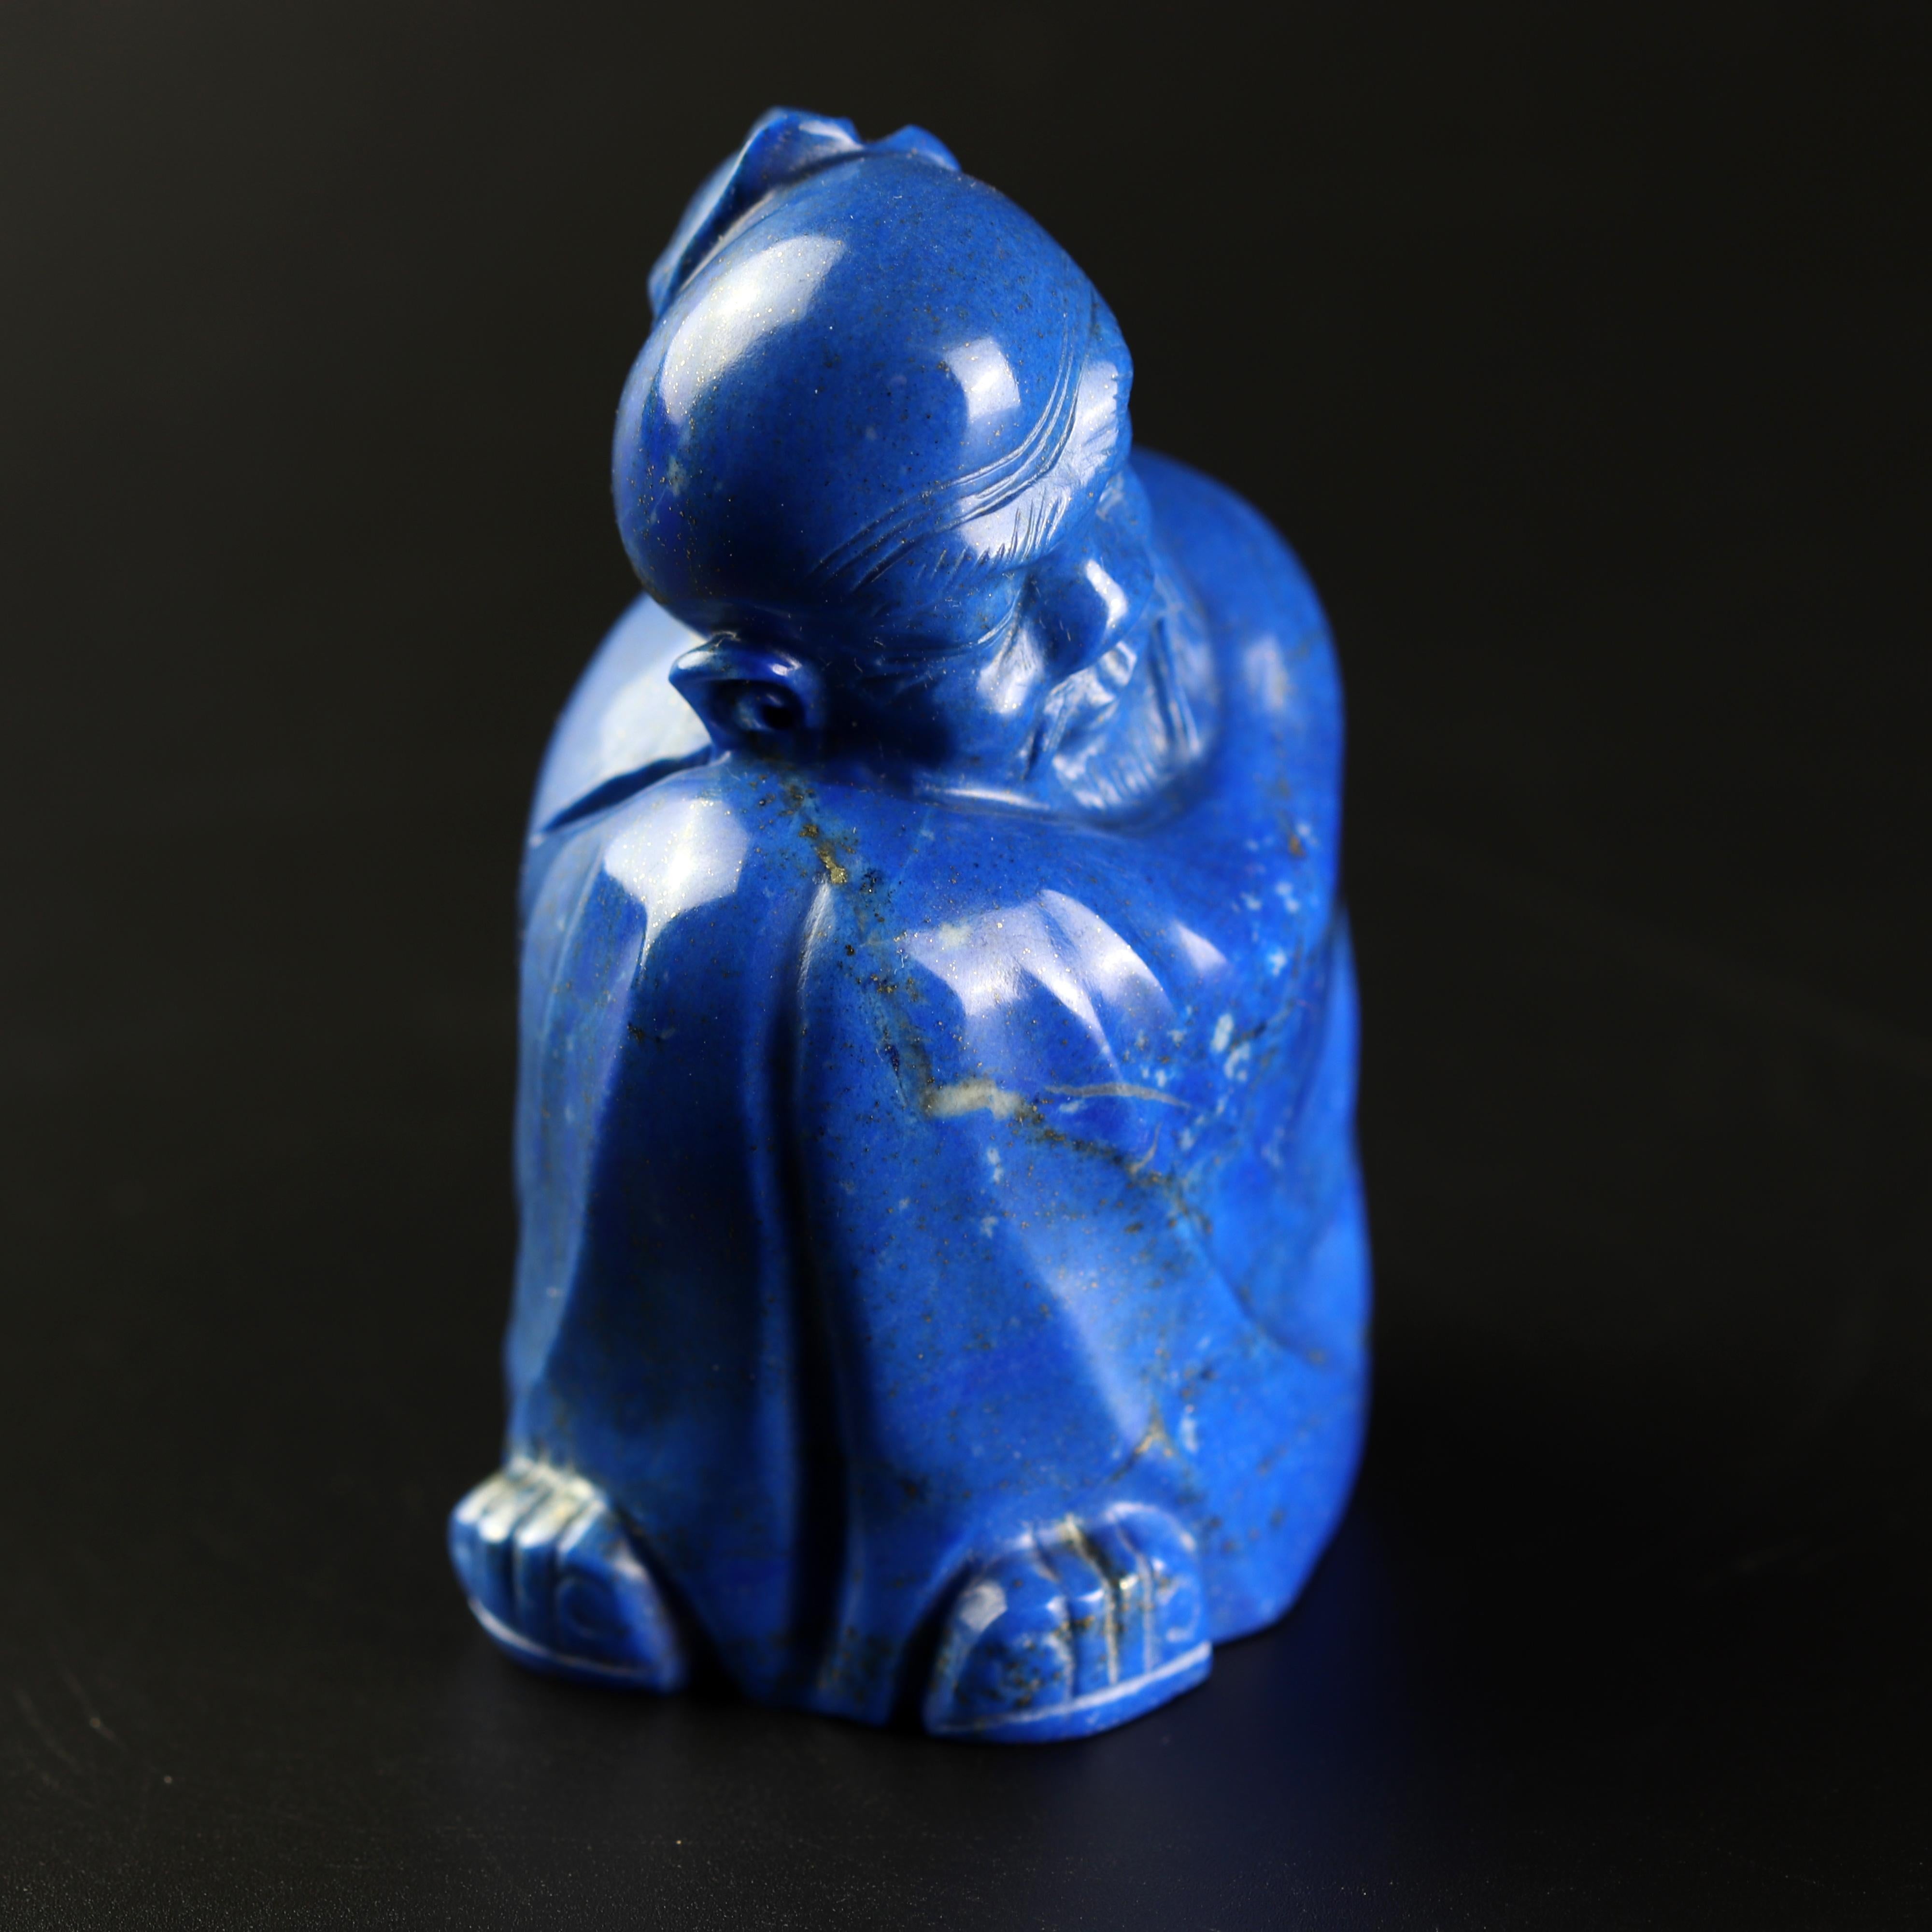 Hong Kong Lapis Lazuli Wise Men Figurine Carved Human Culture Artisanal Statue Sculpture For Sale